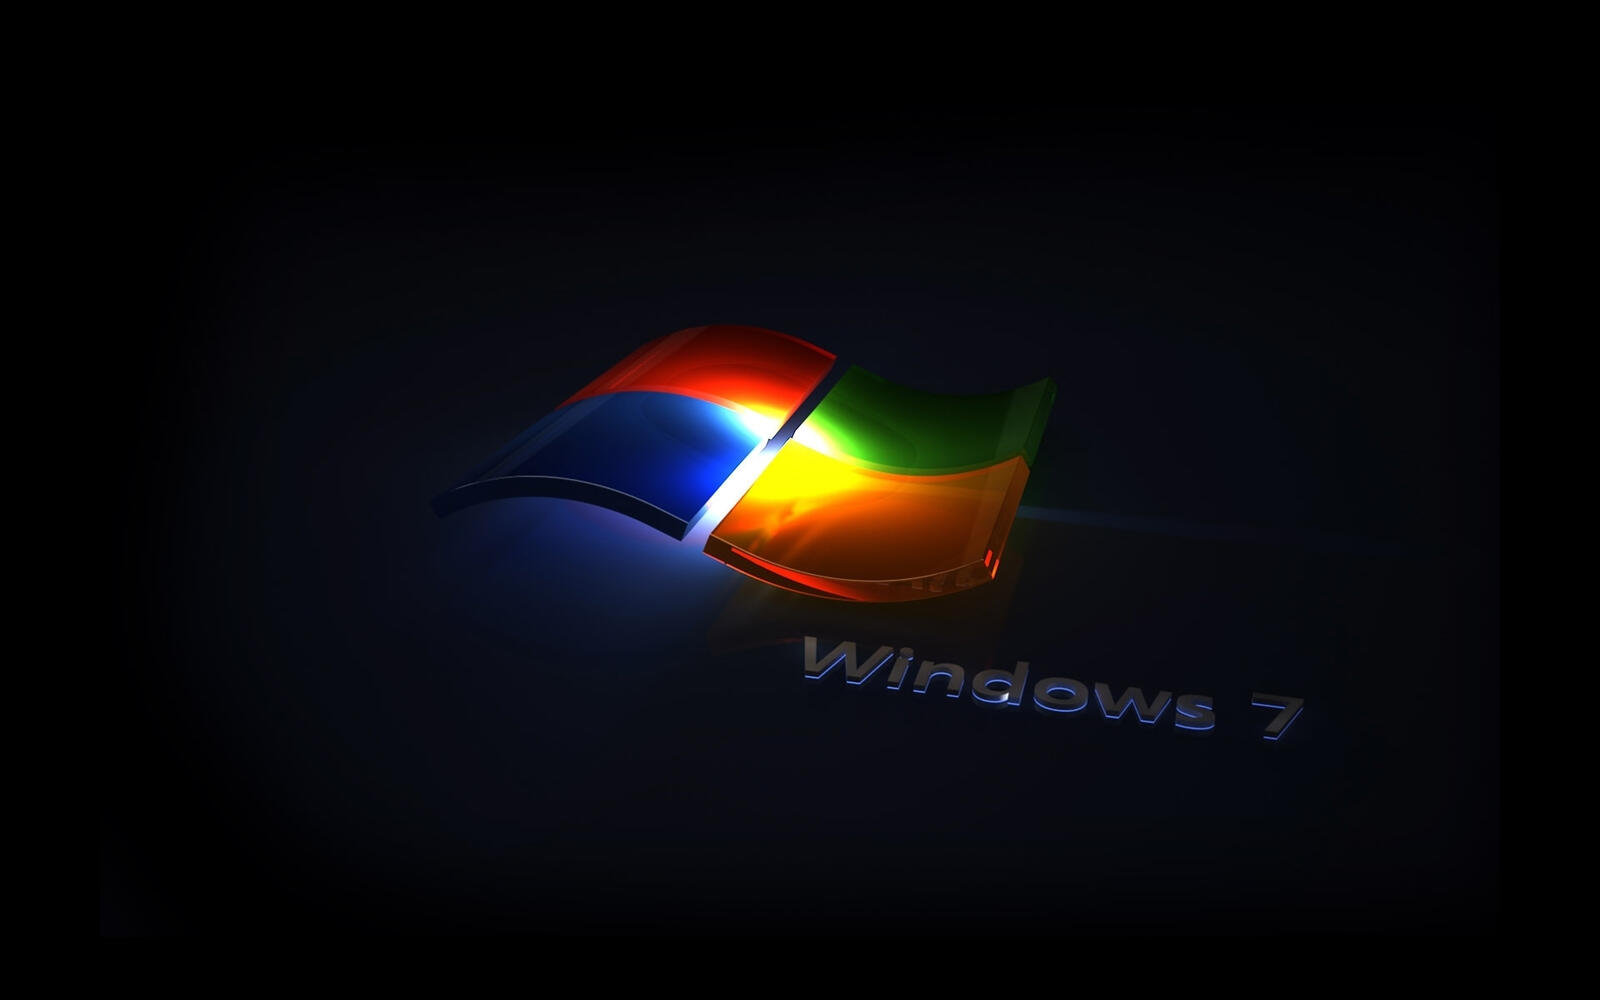 Wallpapers screensaver logo icon on the desktop